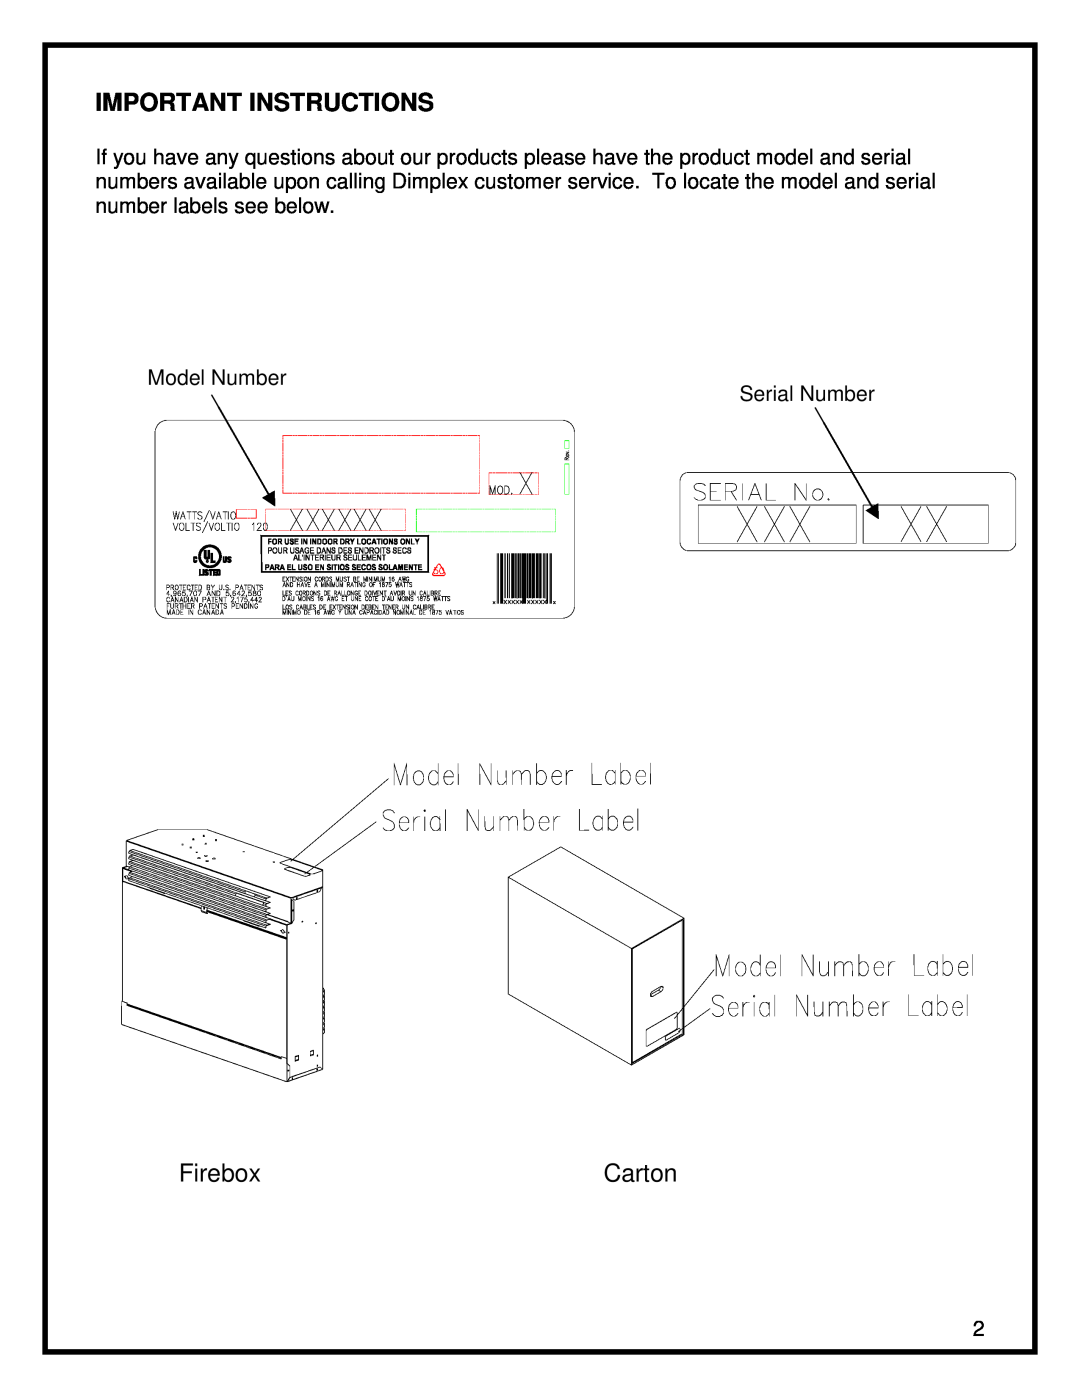 Dimplex 30" FIREPLACE manual Important Instructions, Firebox, Carton 